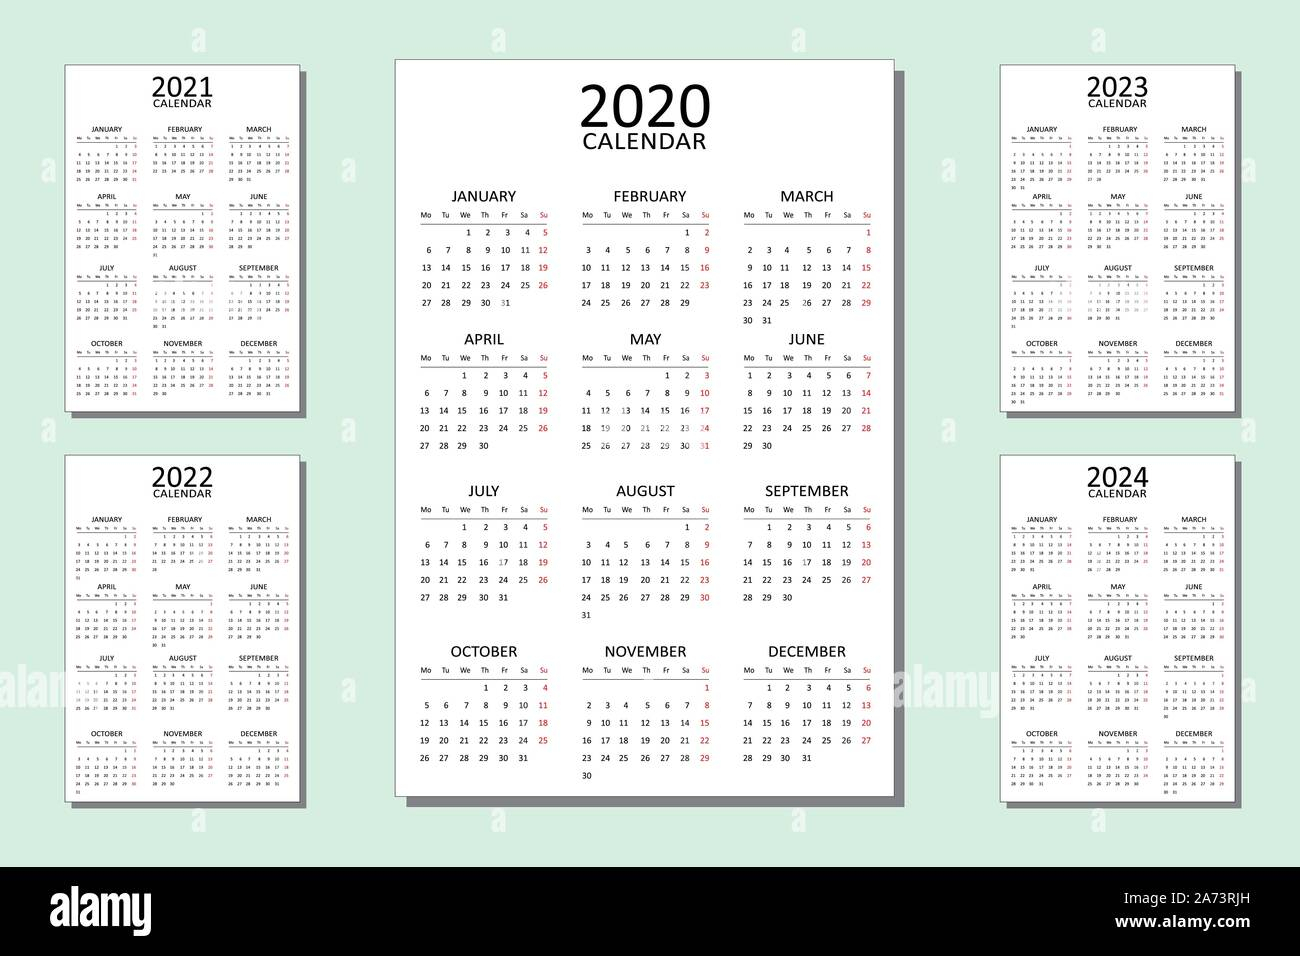 Citadel Academic Calendar 2021 2022 | Lunar Calendar